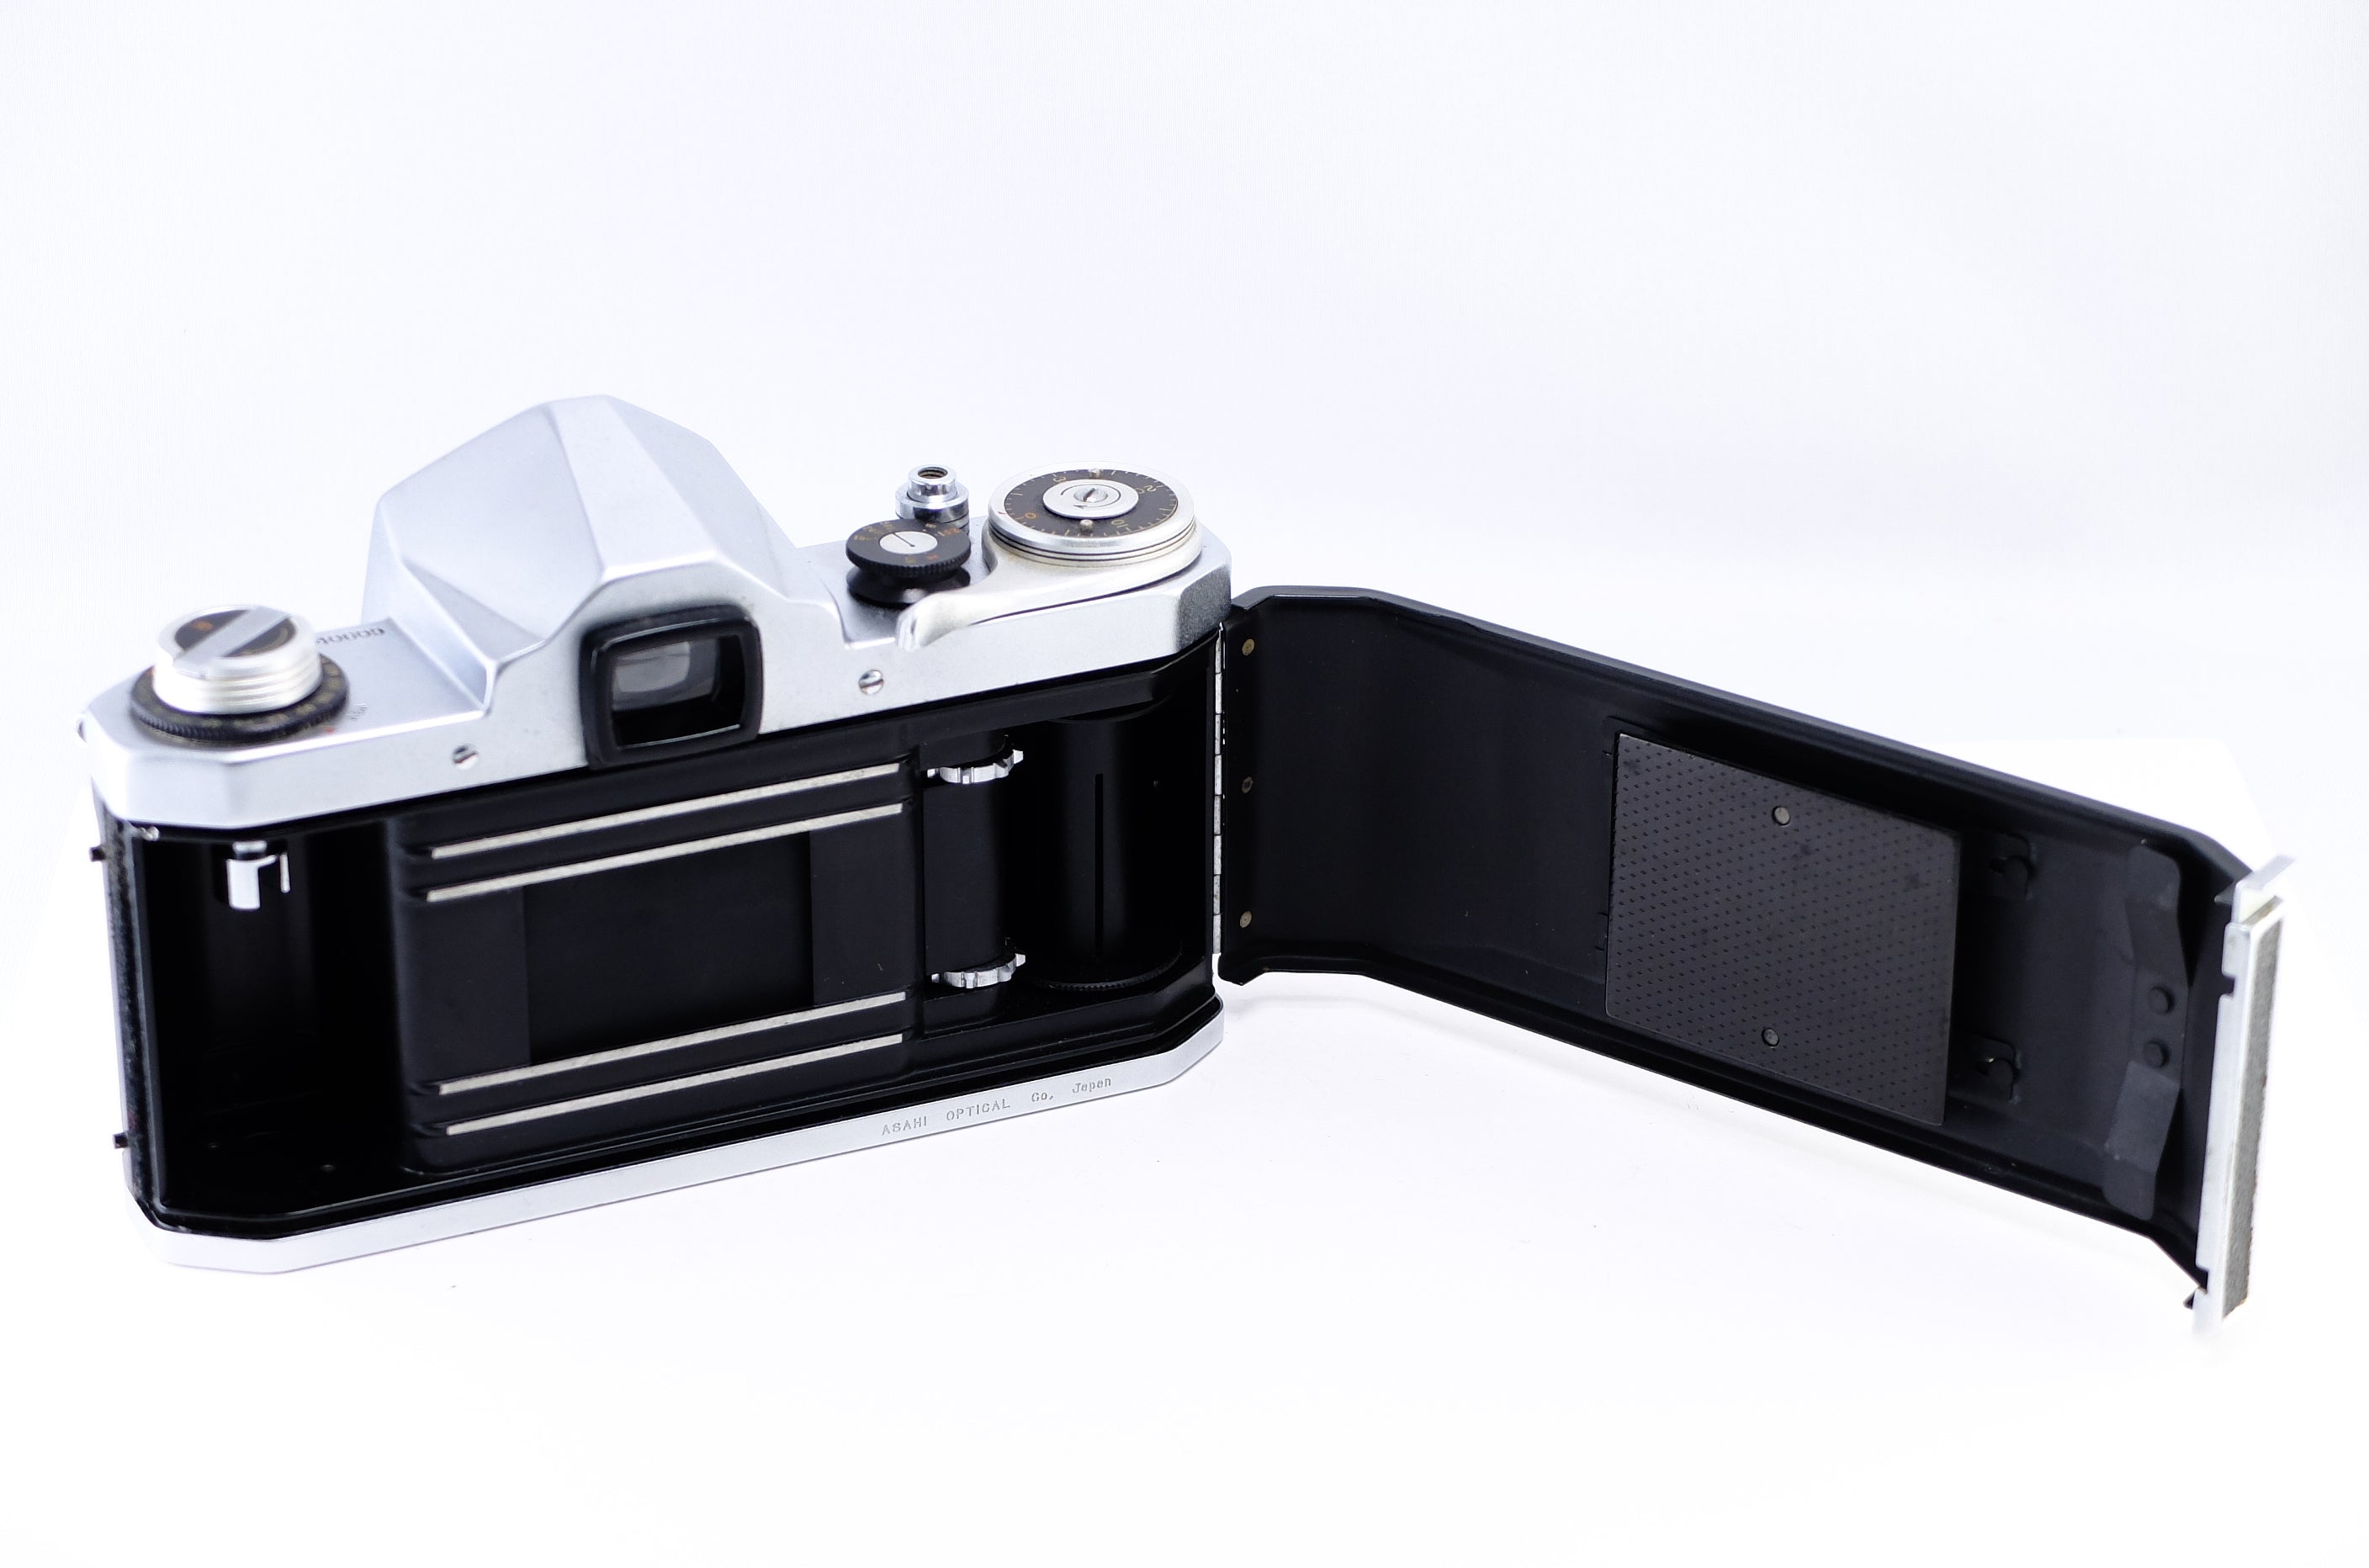 Minolta MD Rokkor 50mm 1:1.7 単焦点標準レンズ